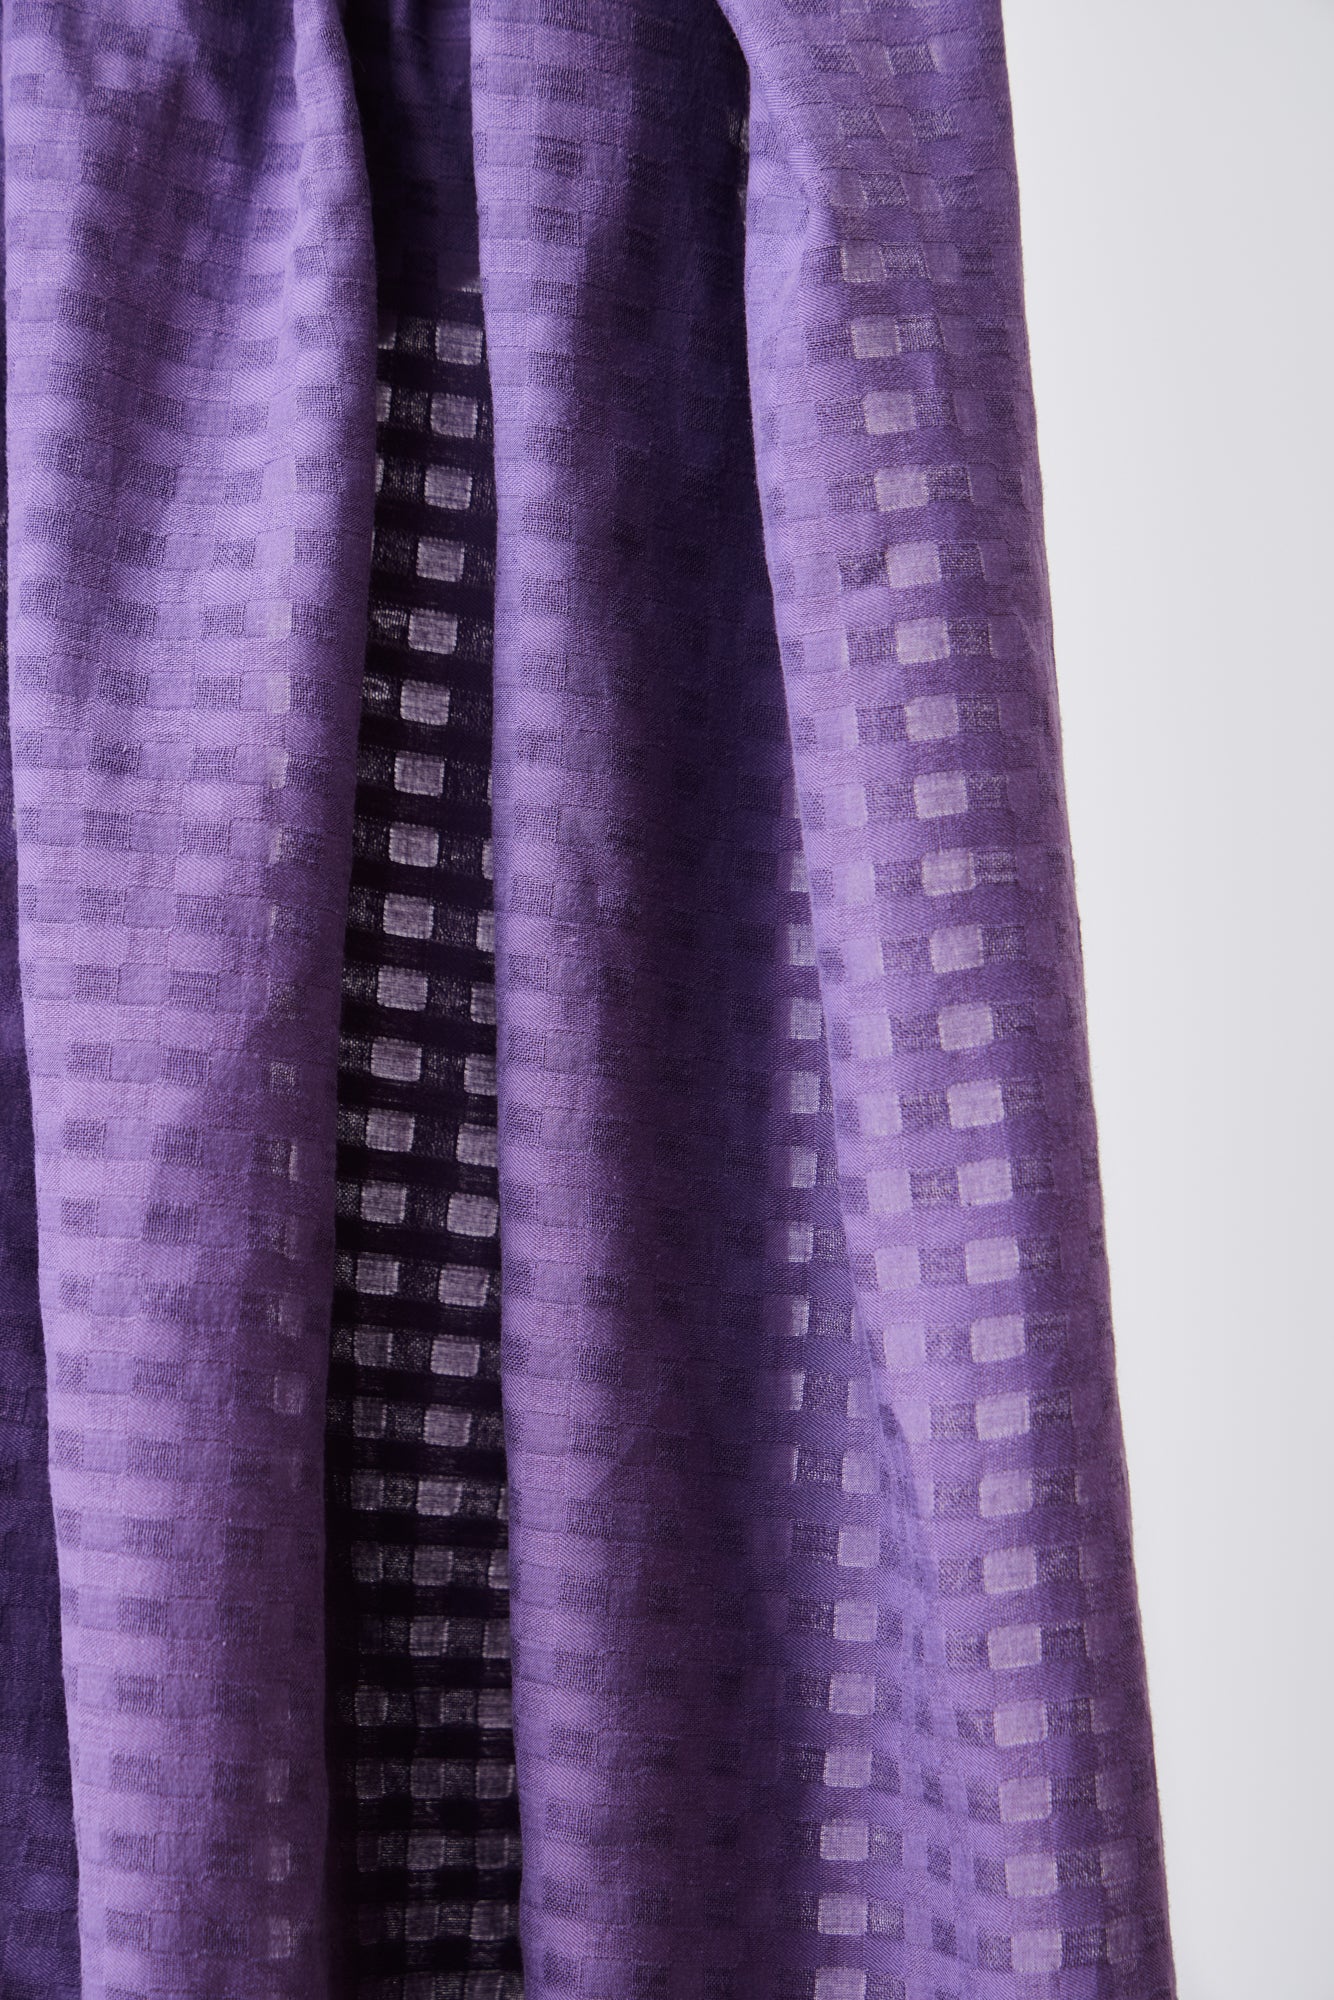 Meet MILK - Sota Sheer Purple Night with TENCEL™ Lyocell fibres